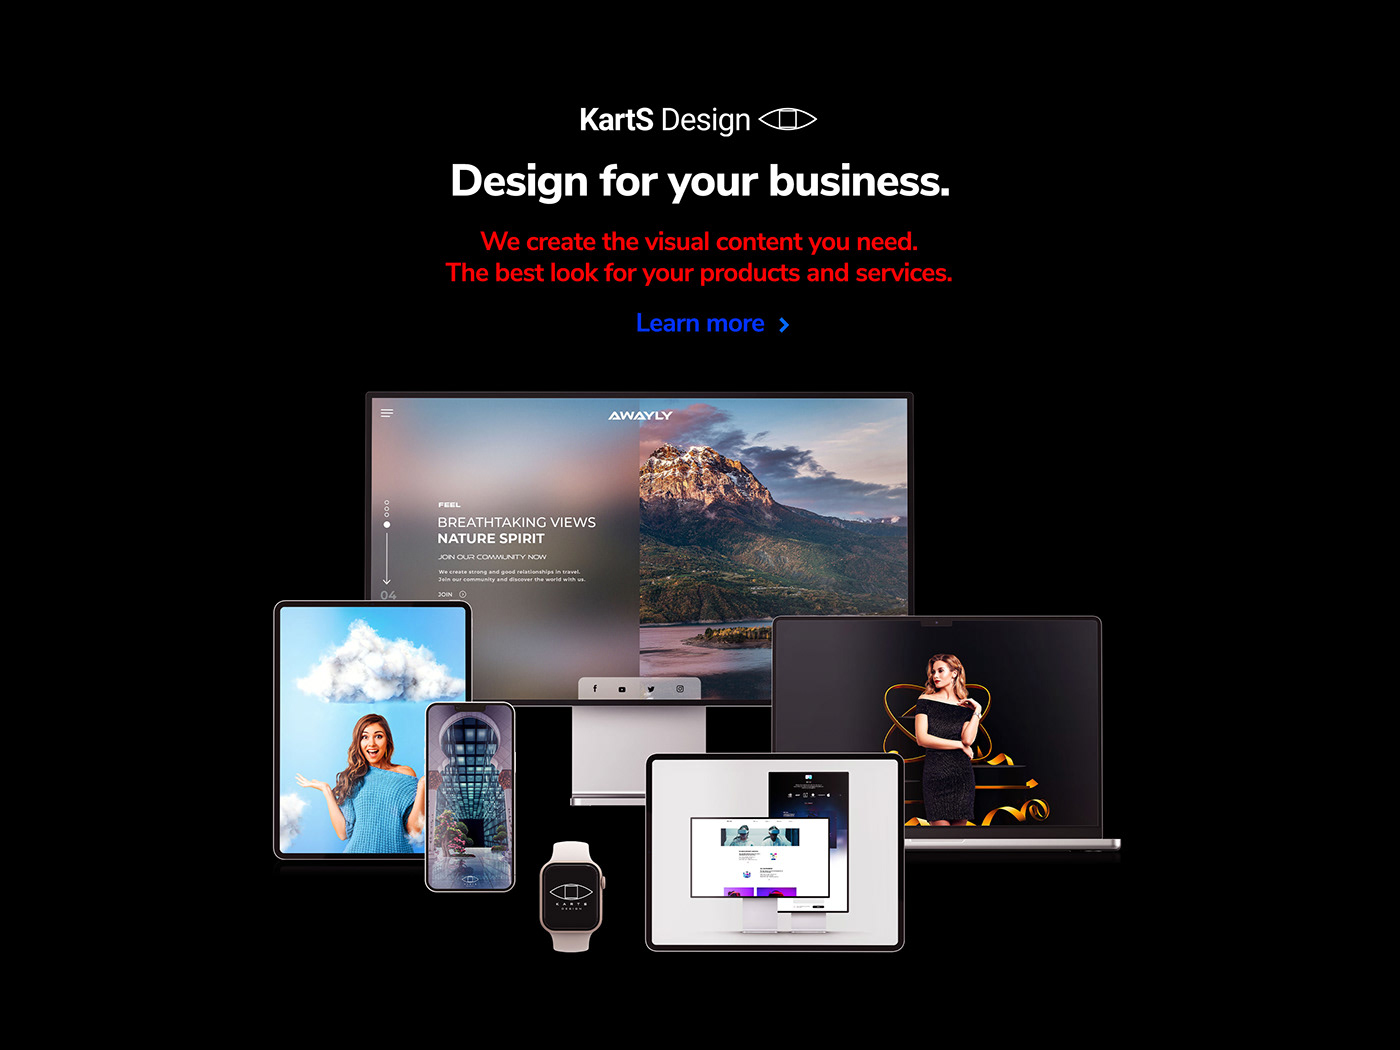 Brand Design brand identity design graphic identity karts kartsdesign visual